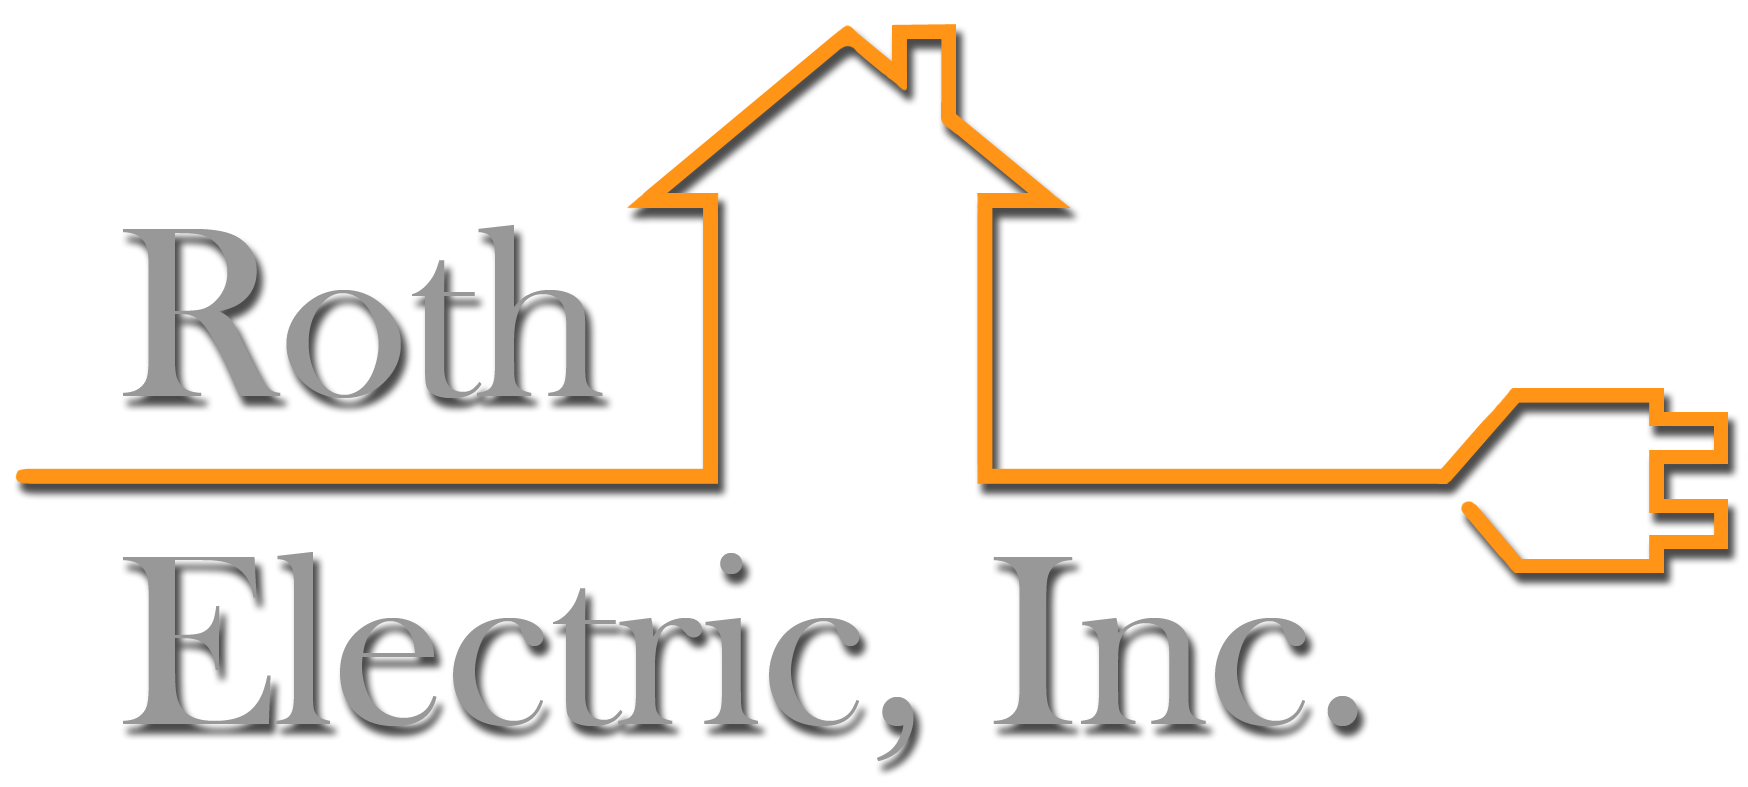 Roth Electric, Inc.